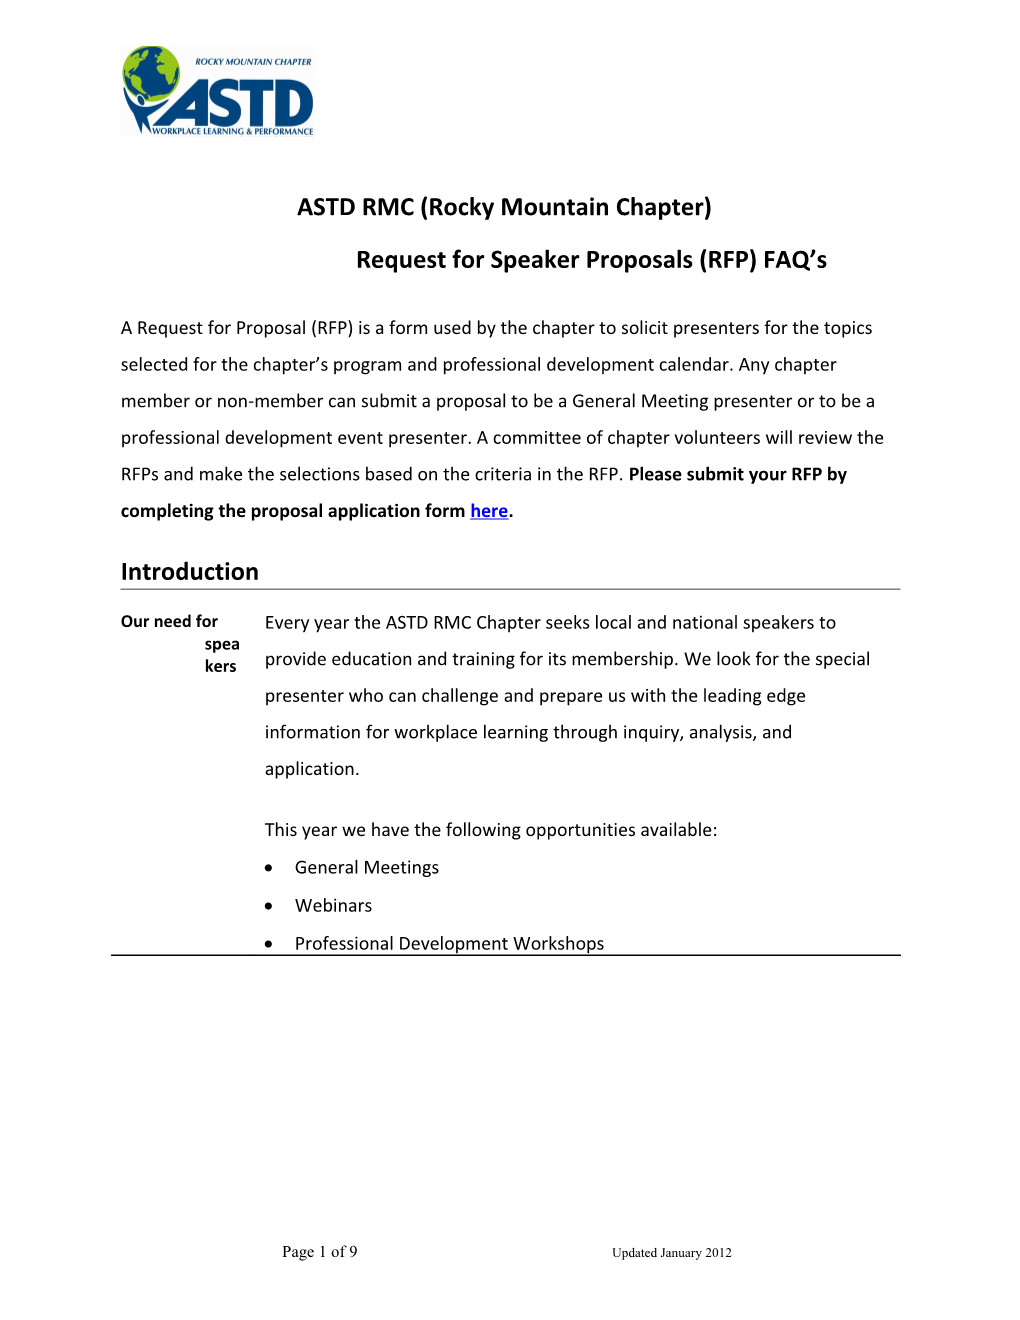 ASTD RMC (Rockymountain Chapter)